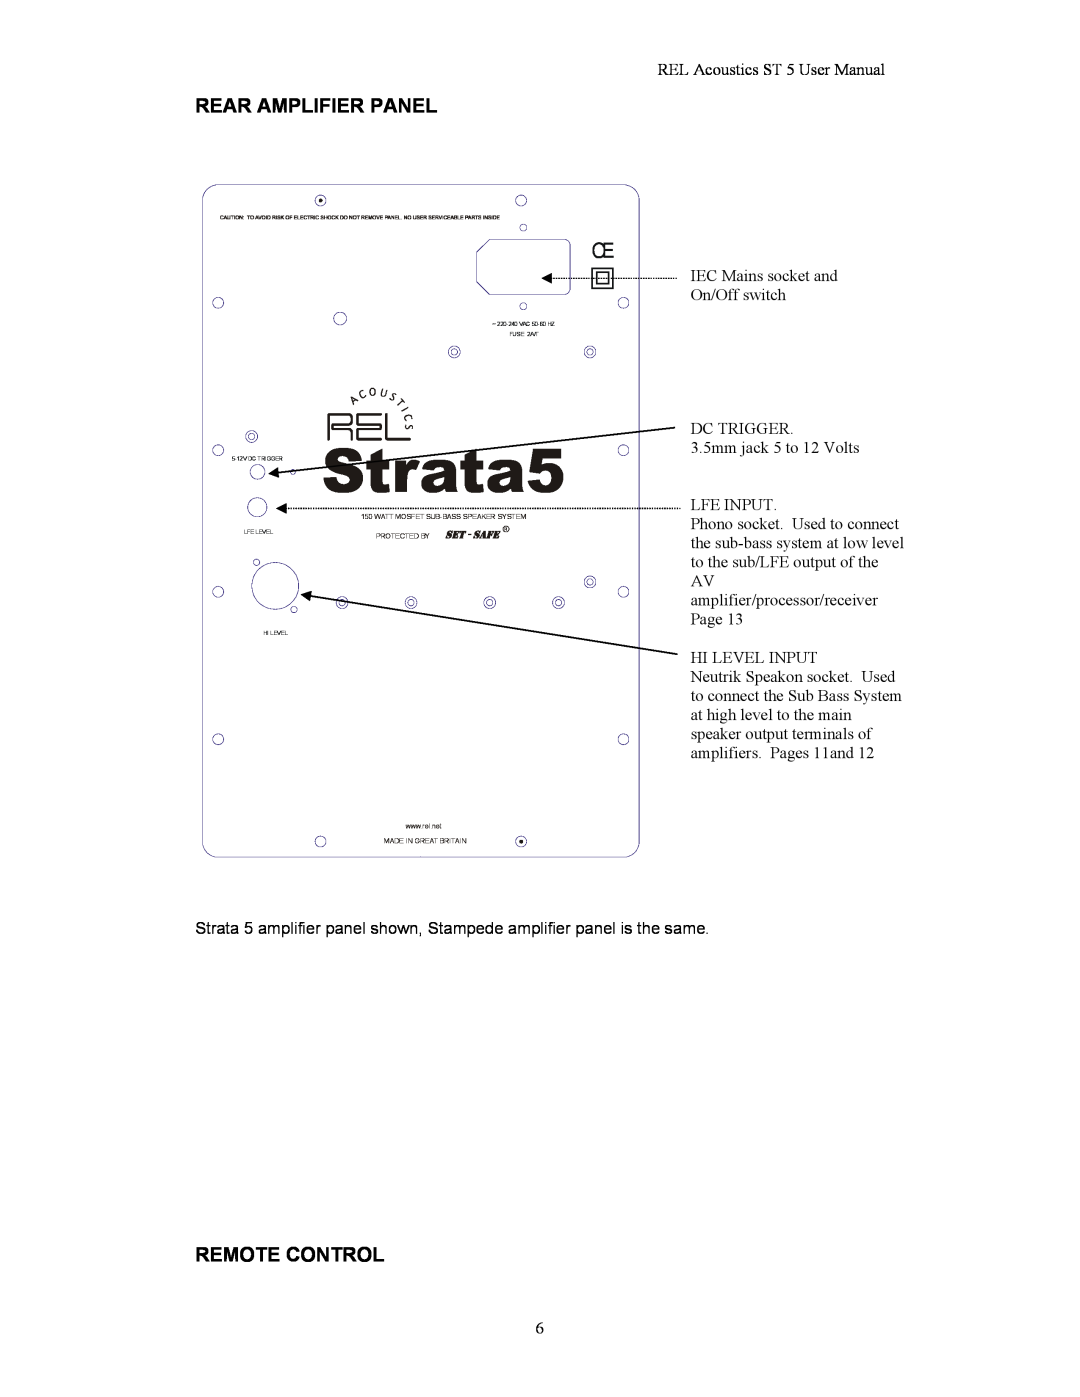 REL Acoustics Strata 5, Stampede user manual Rear Amplifier Panel, Remote Control 